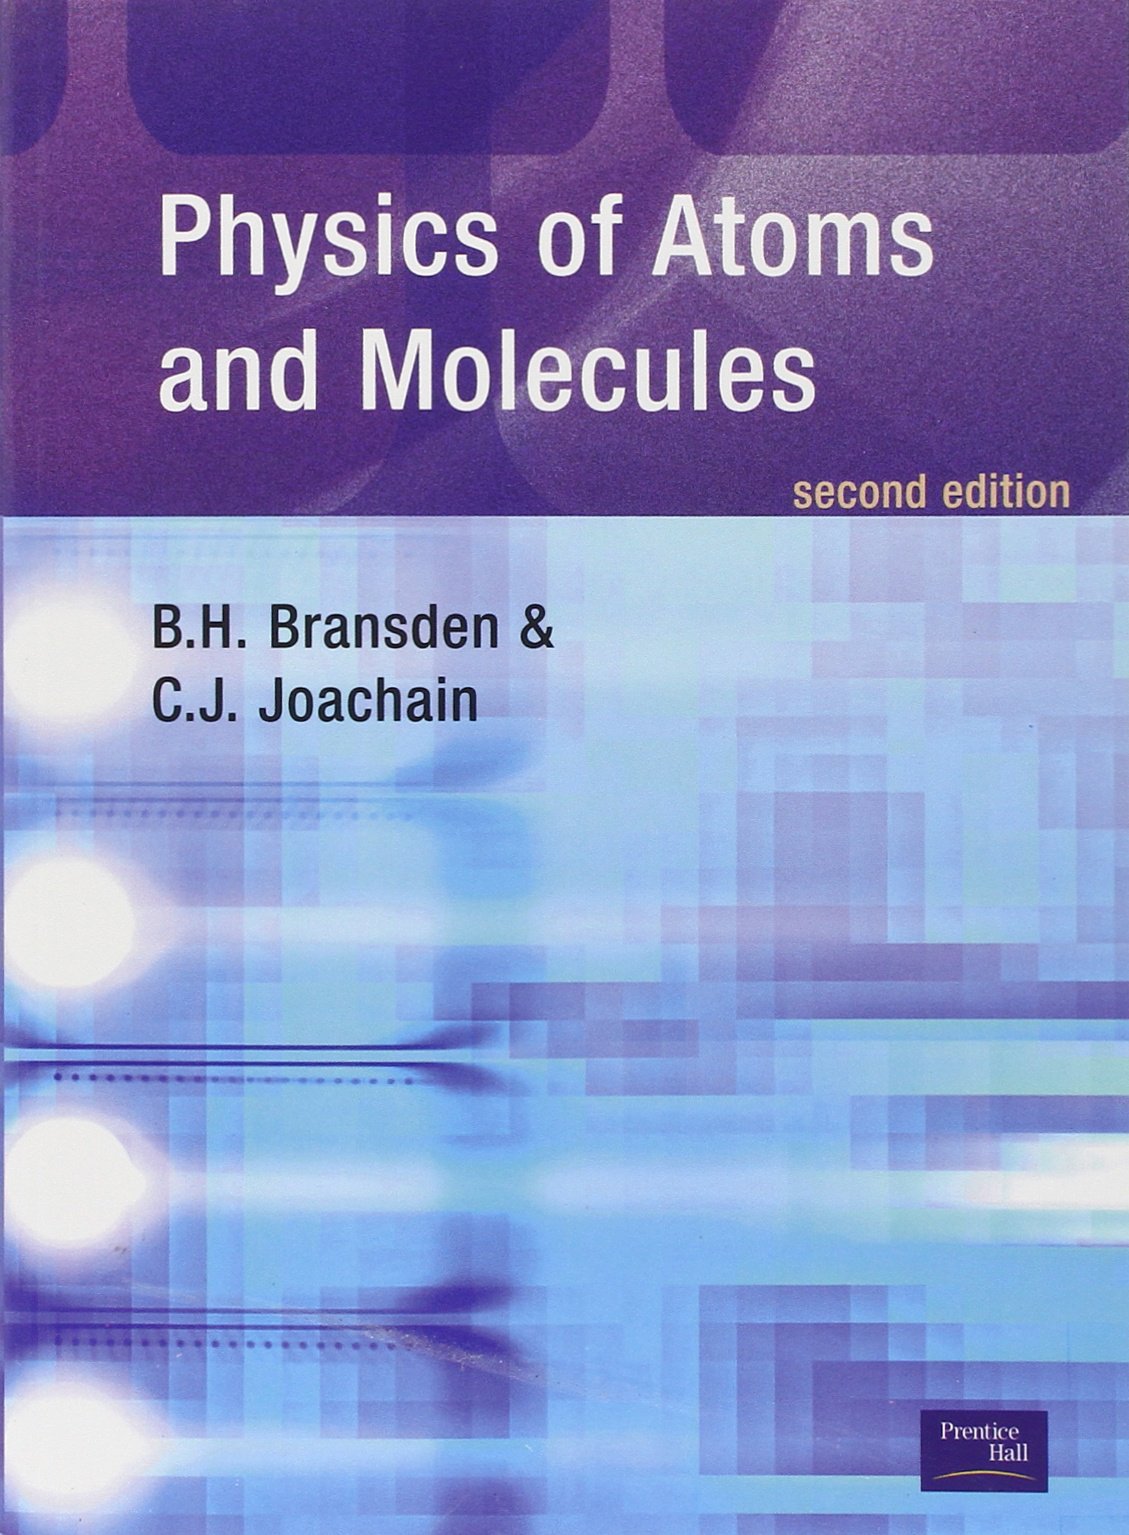 Atomic and Molecular Physics